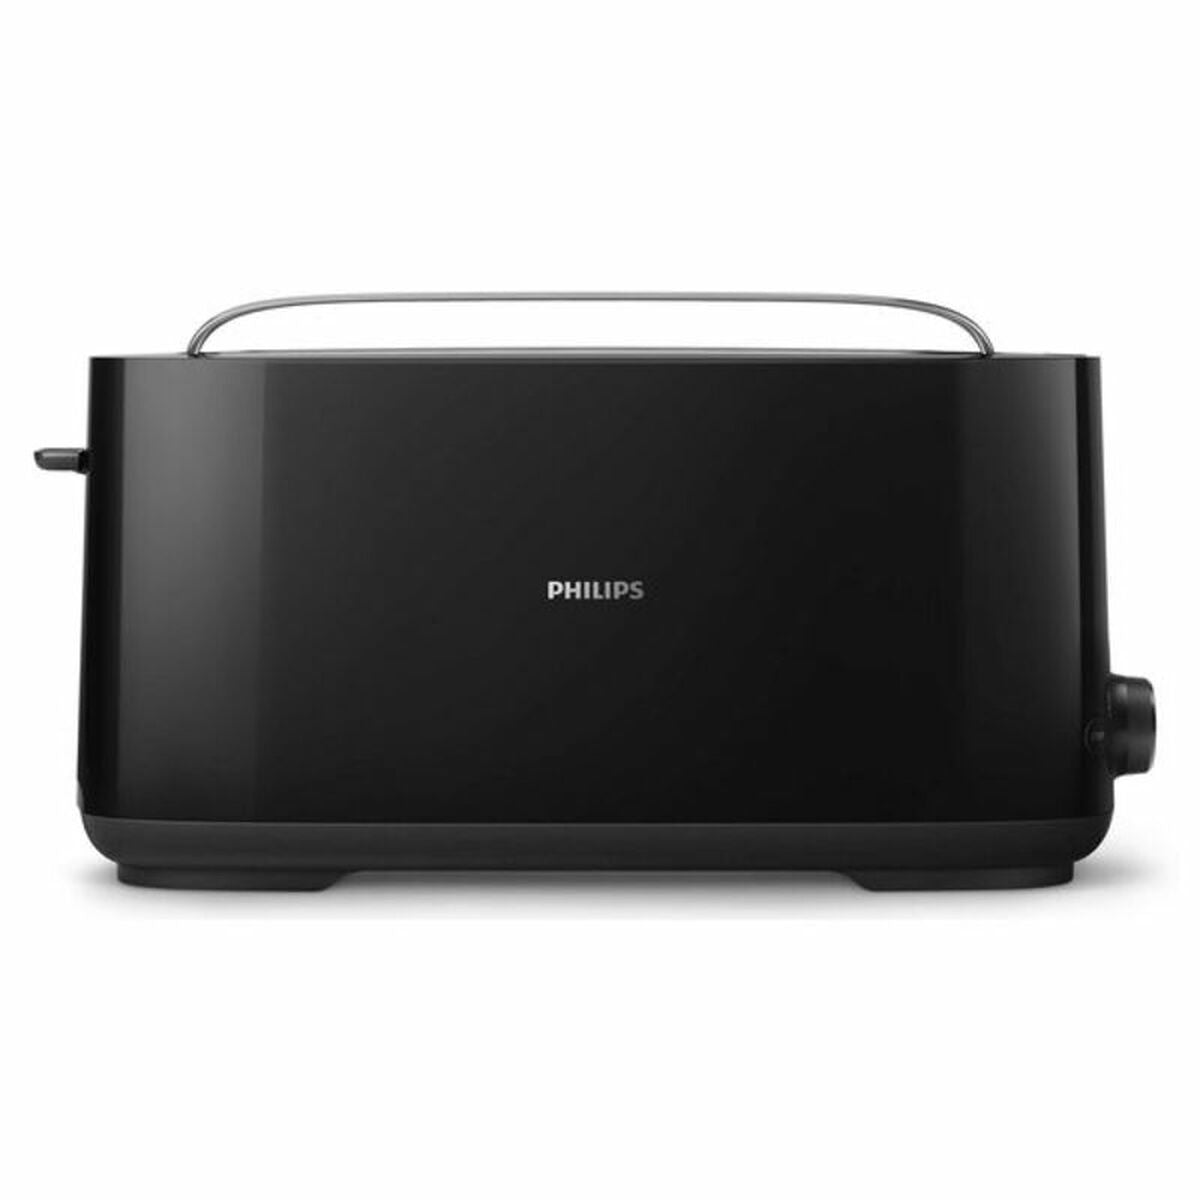 Toaster Philips 950 W Schwarz - CA International  